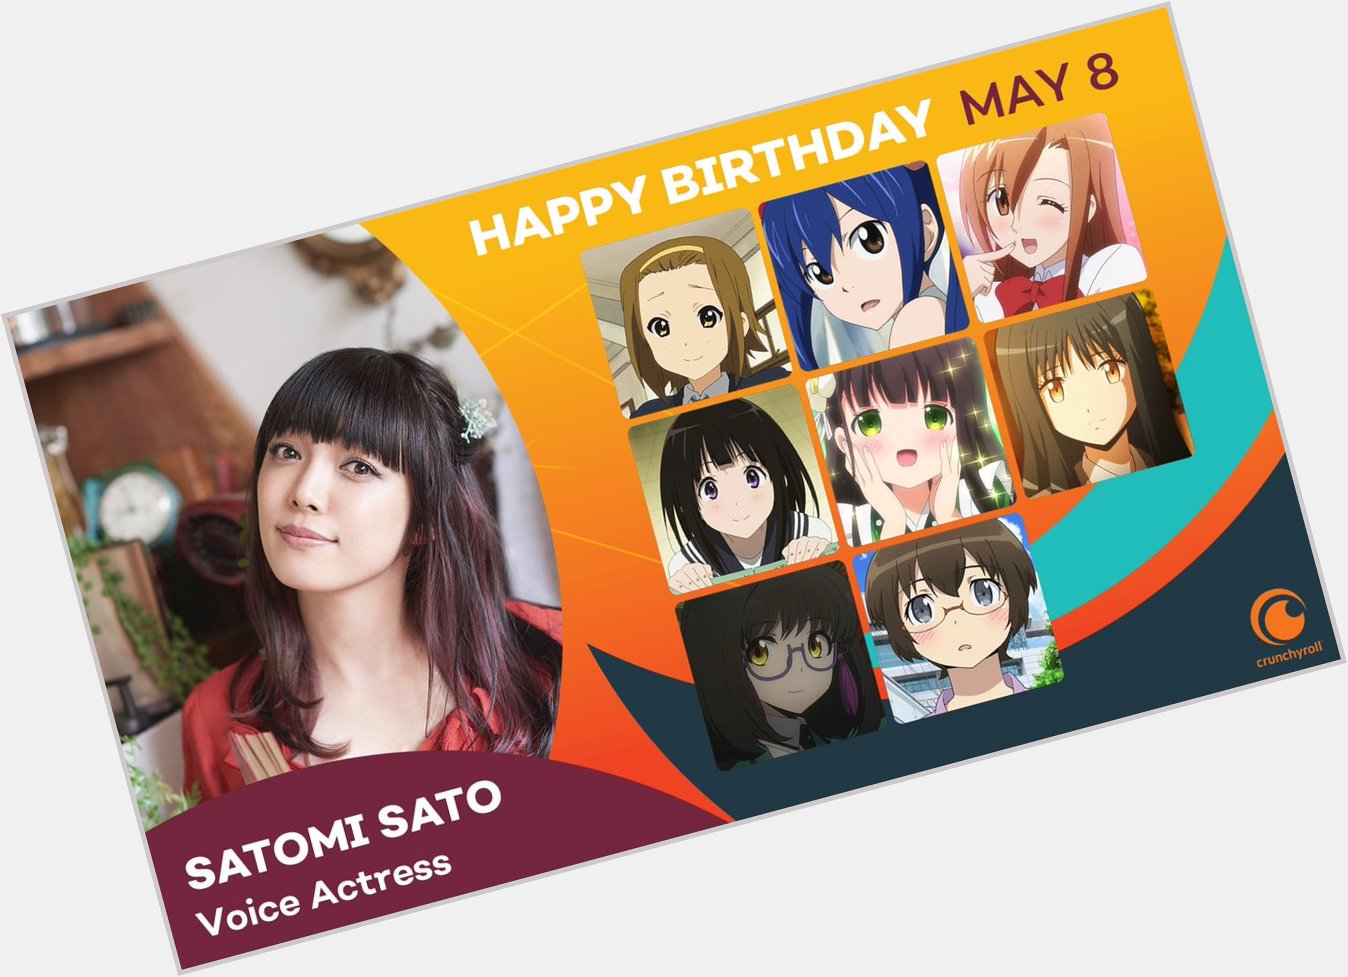 Happy Birthday to the Japanese Voice Actress Satomi Sato!! 